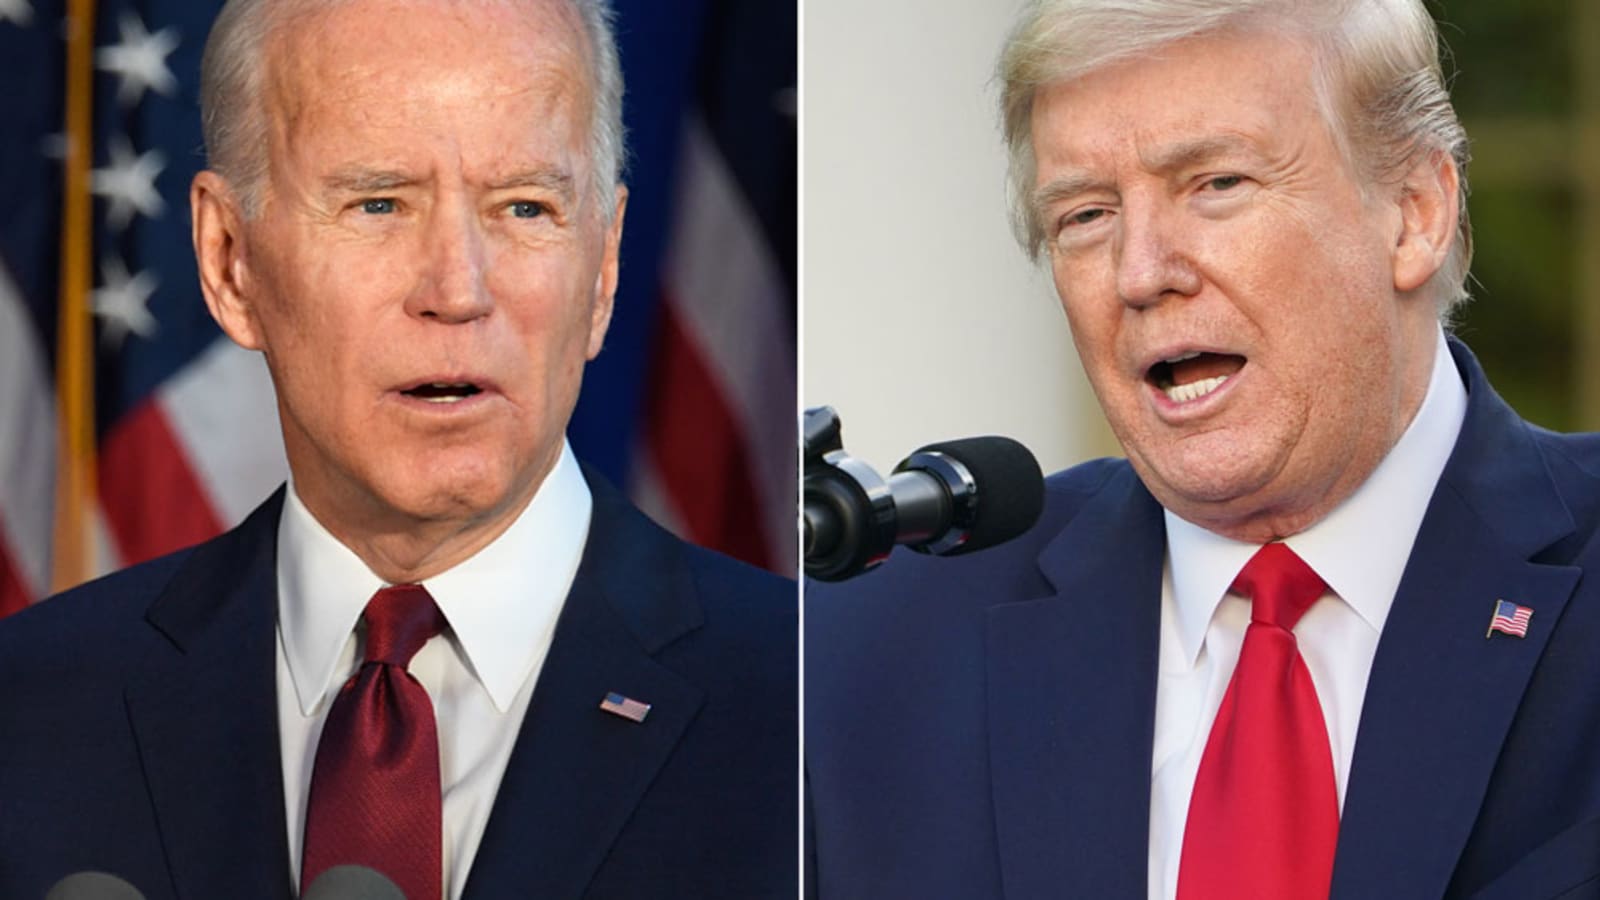 Trump tells Biden to 'fight' Tara Reade sexual assault allegation